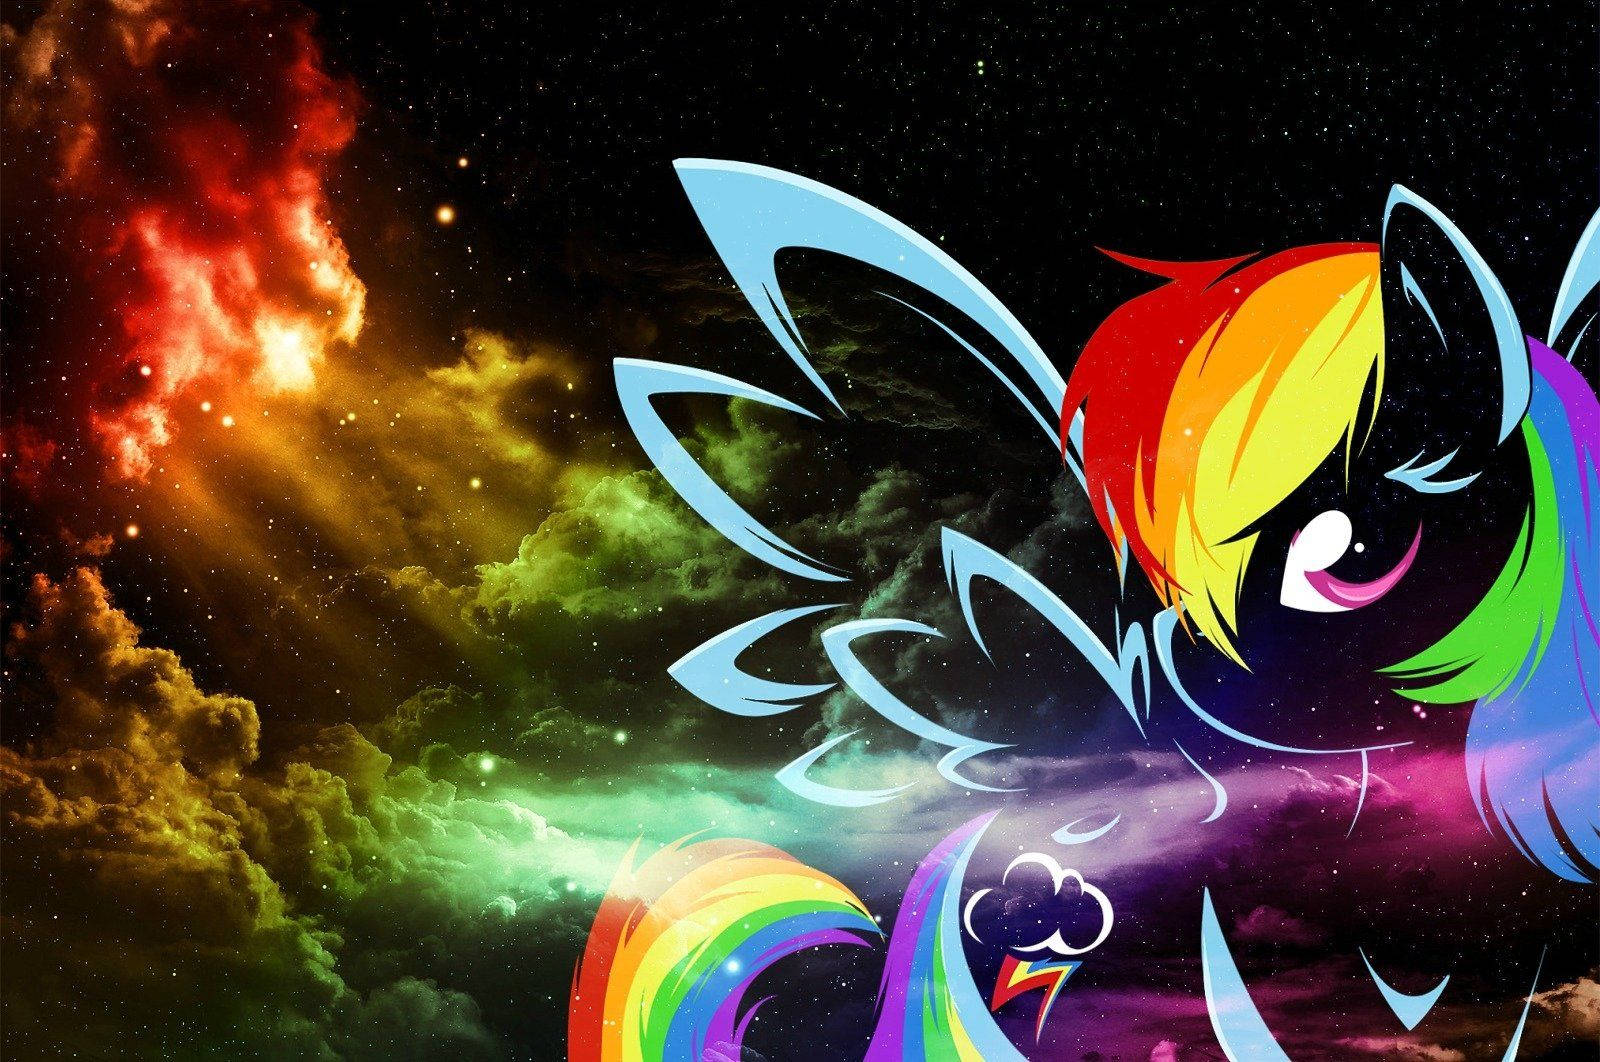 My Little Pony Rainbow Dash Wallpaper